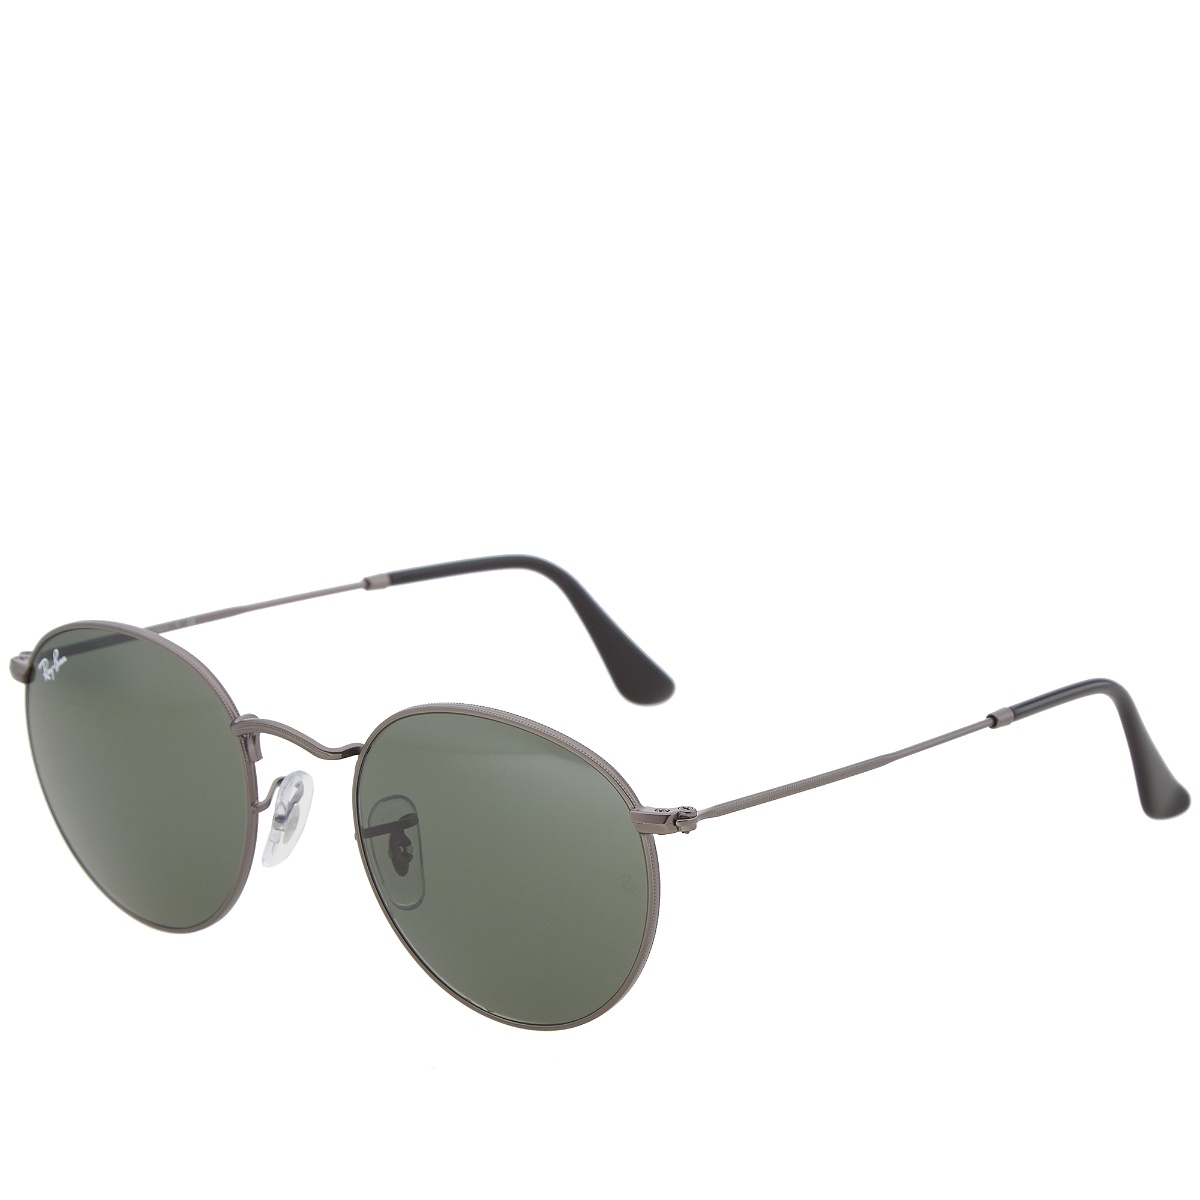 Details more than 189 best sunglasses 2015 best